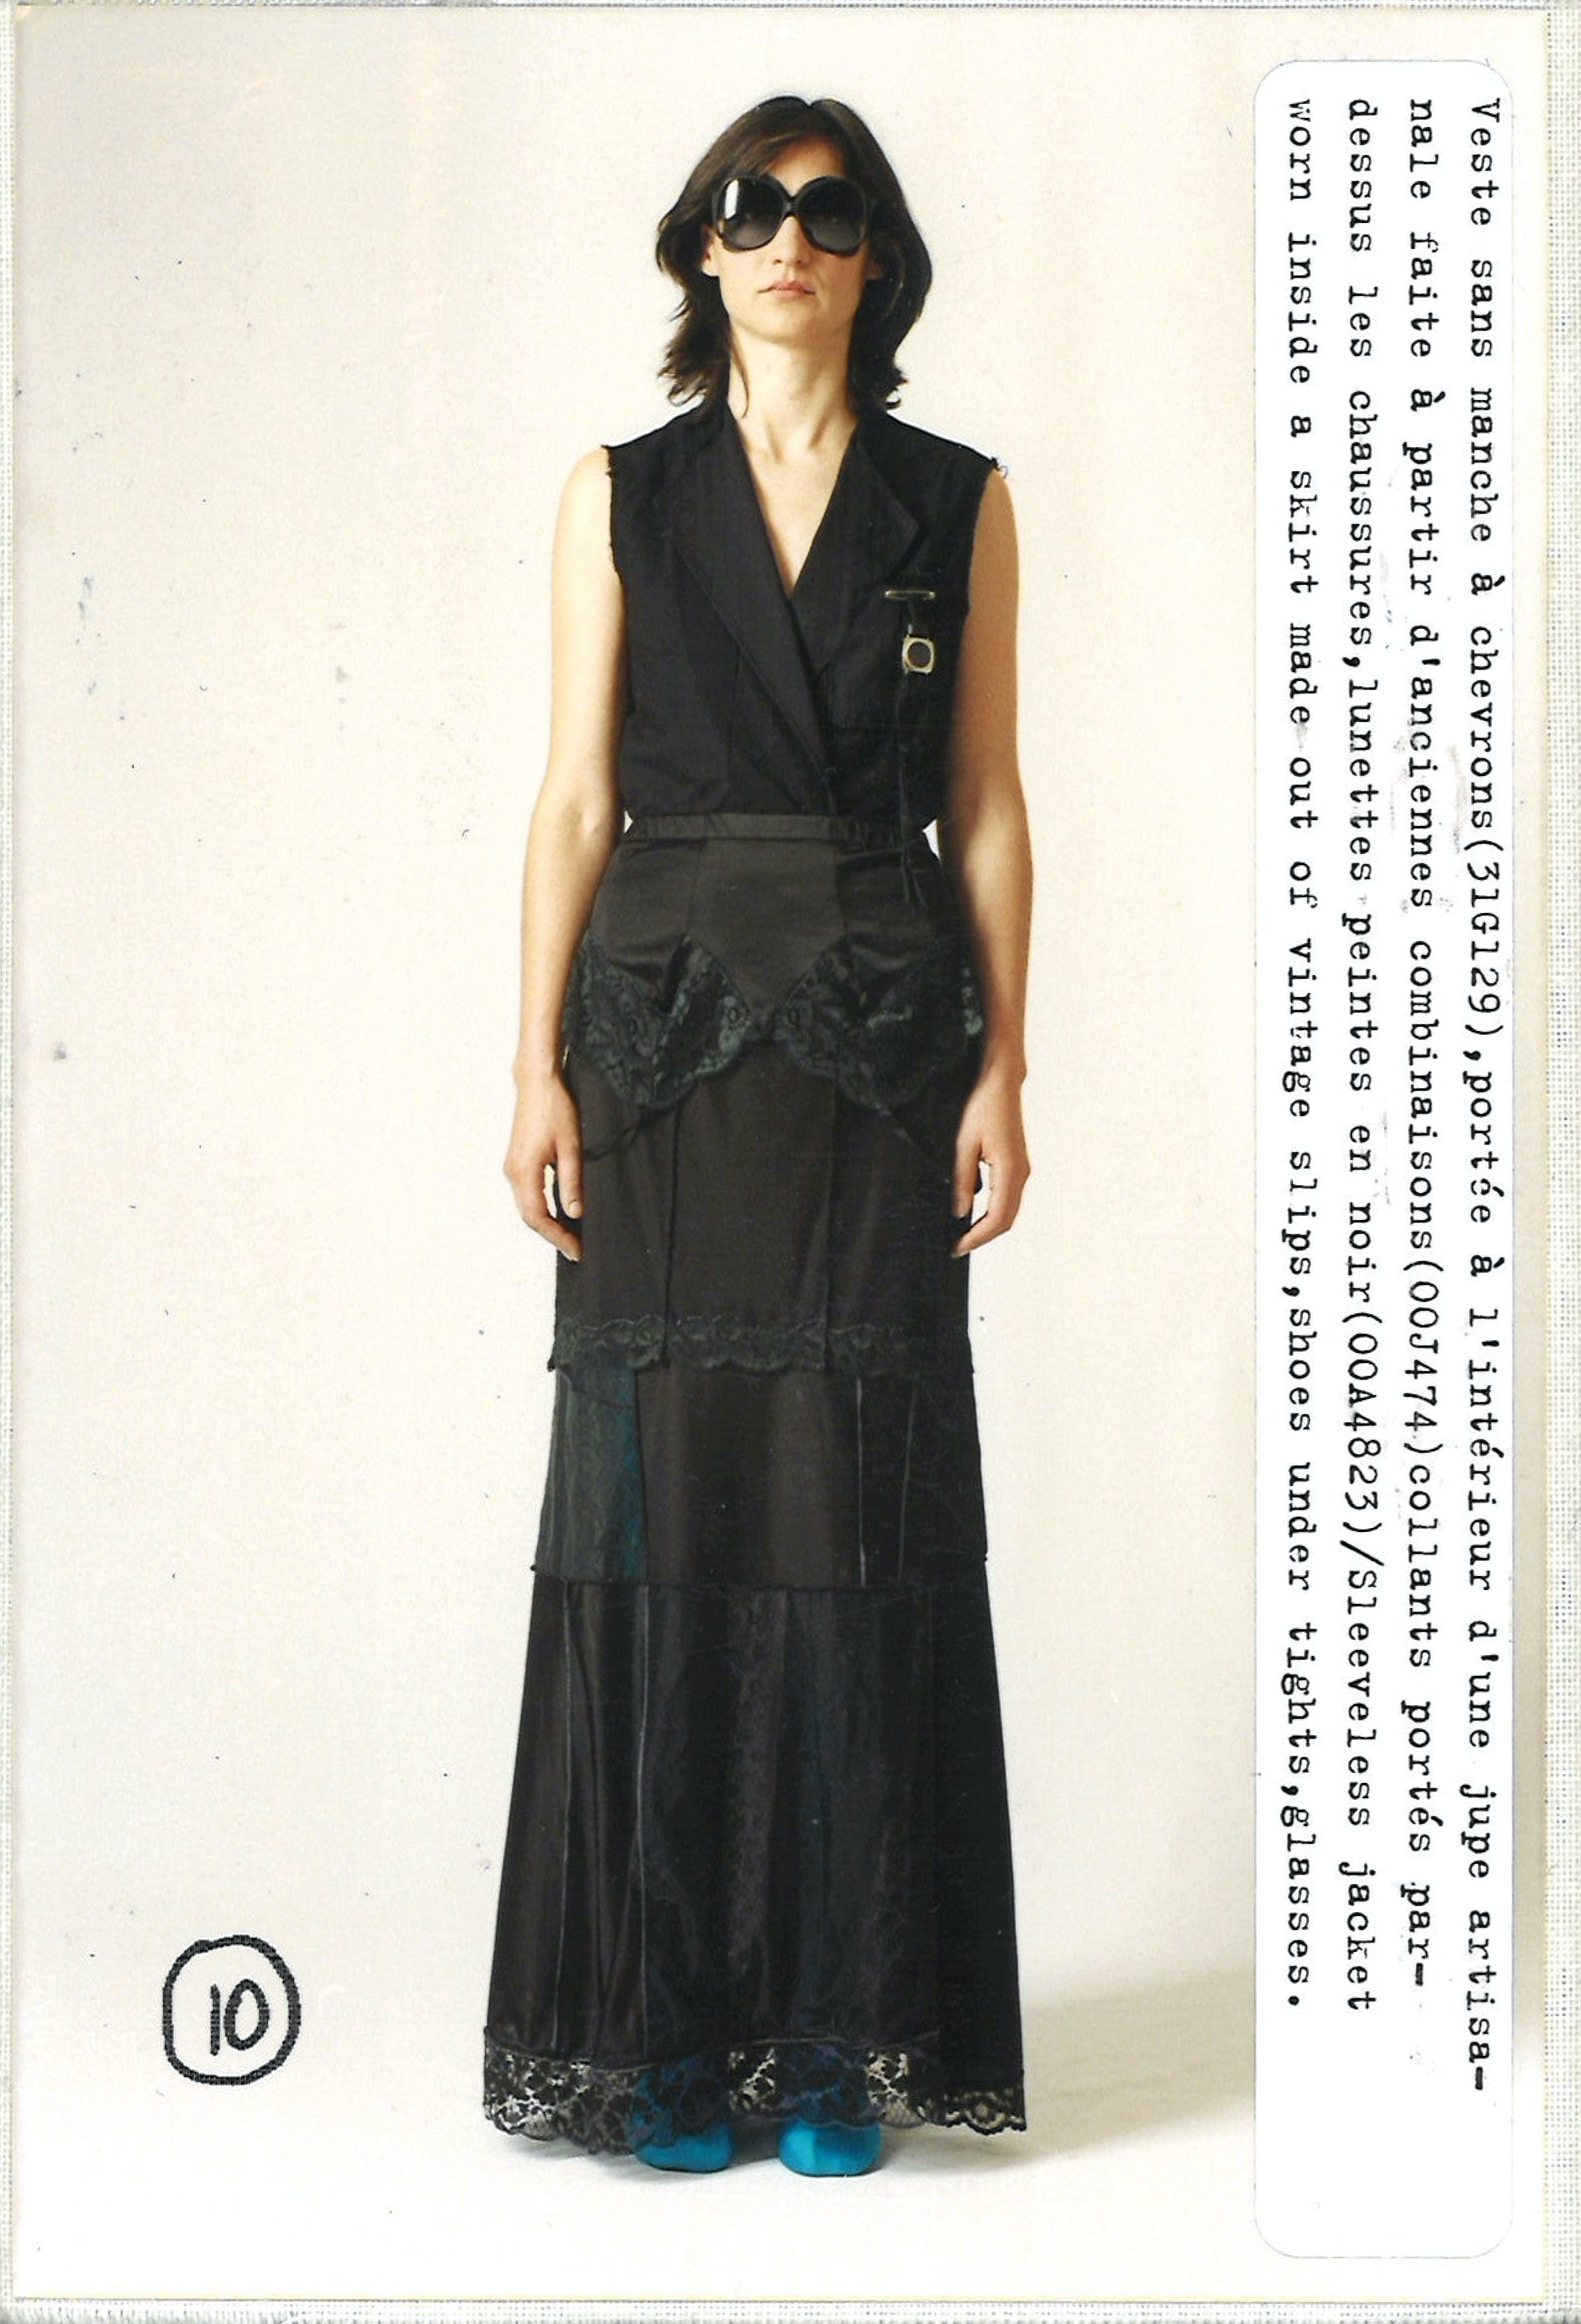 Maison Martin Margiela Lookbook
Womenswear Collection Spring/Summer 2003